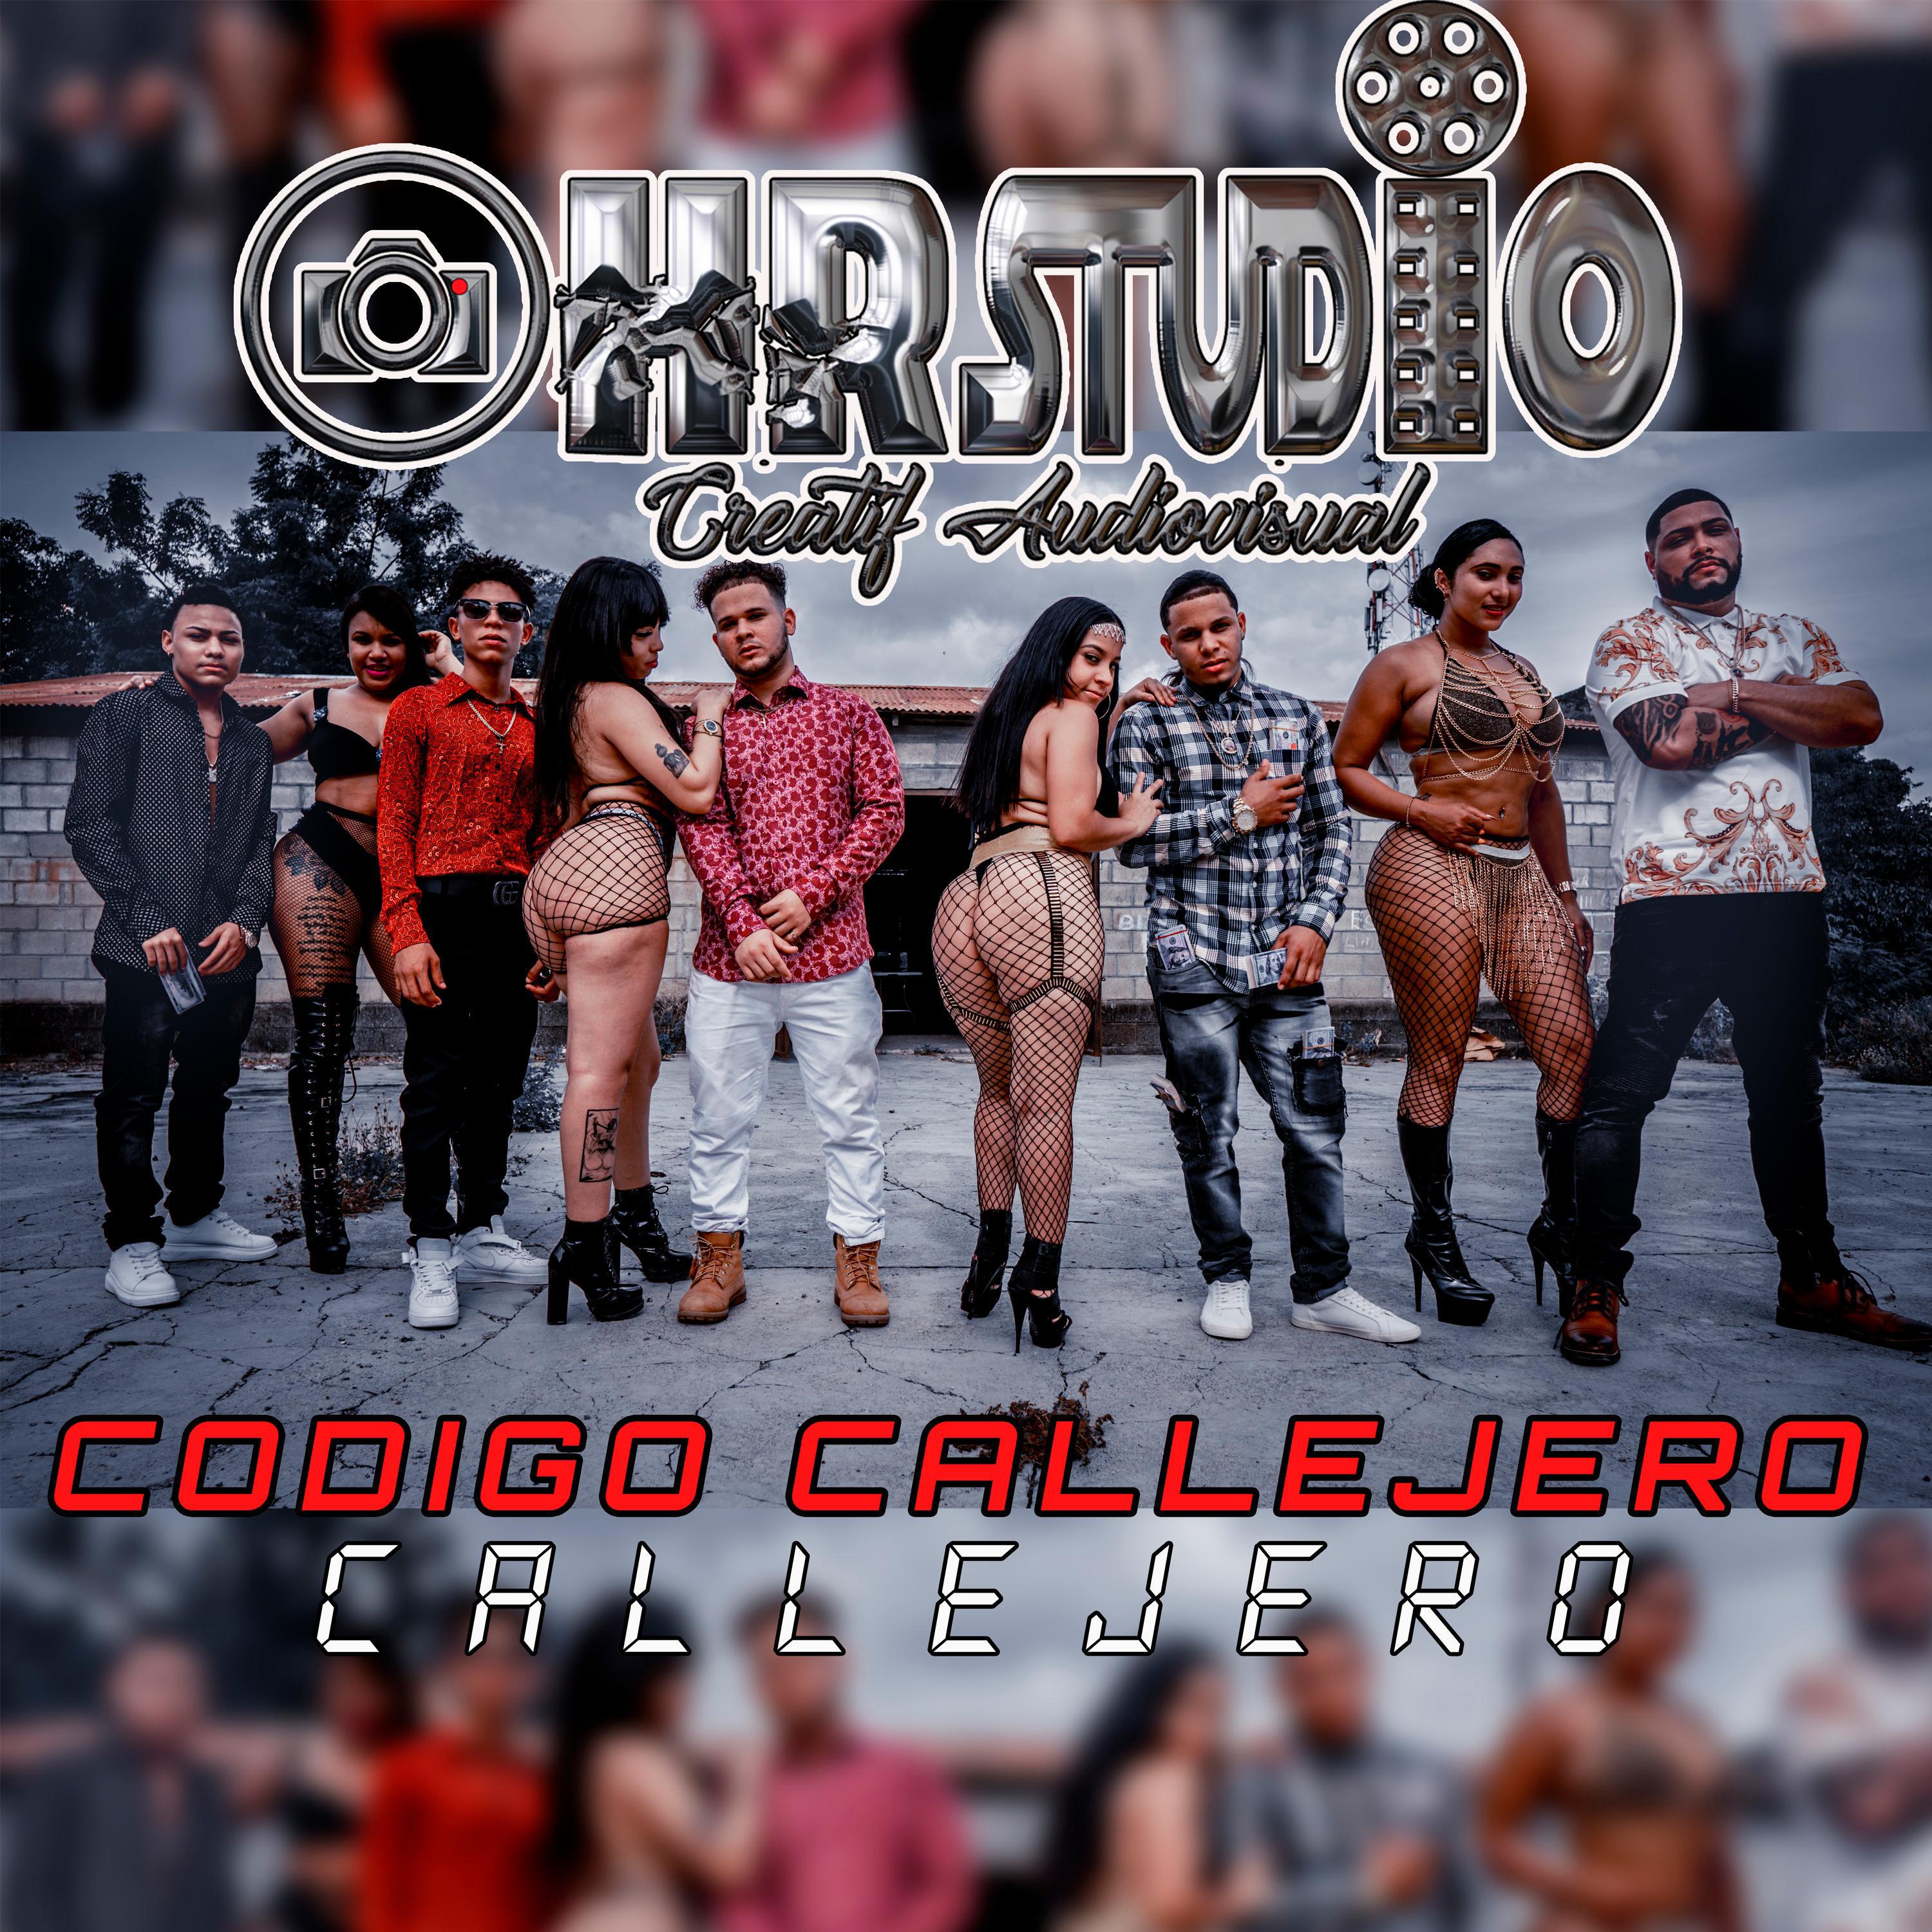 Julian HR Estudio - Codigo Callejero (feat. El vegano, the mini, Avipita Rd, Willistic Wes & Ache Fenix)